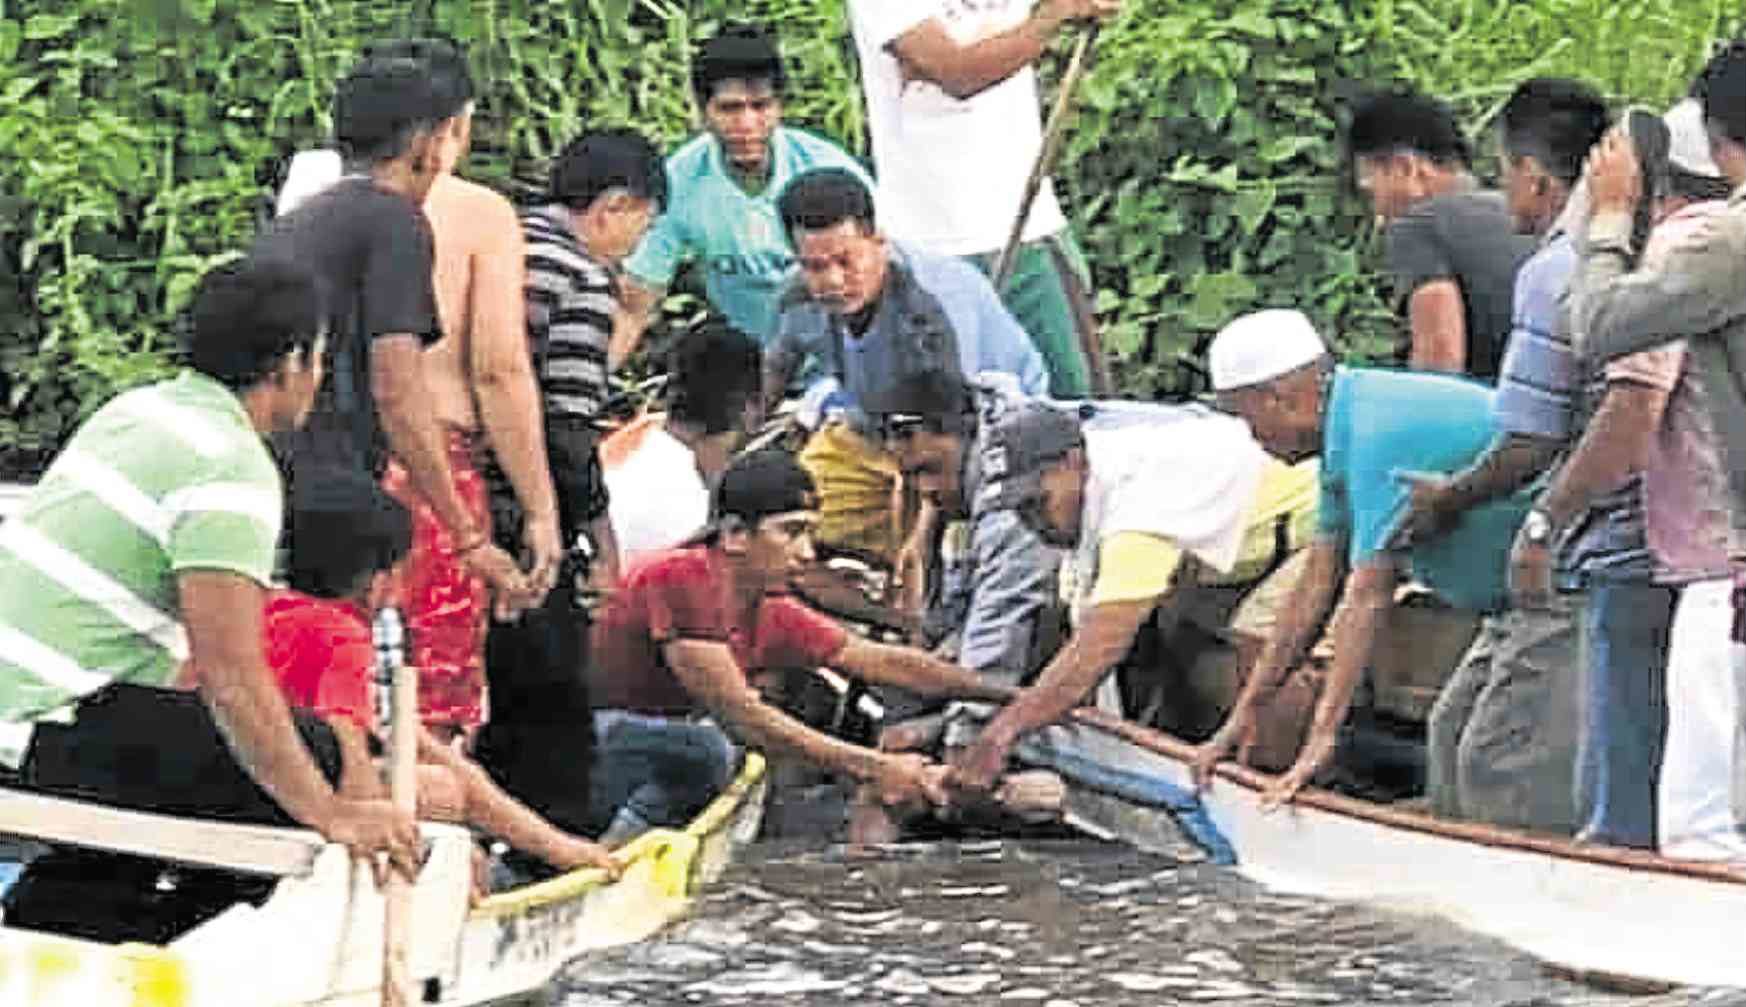 More regulation pushed for boats plying Rio Grande de Mindanao